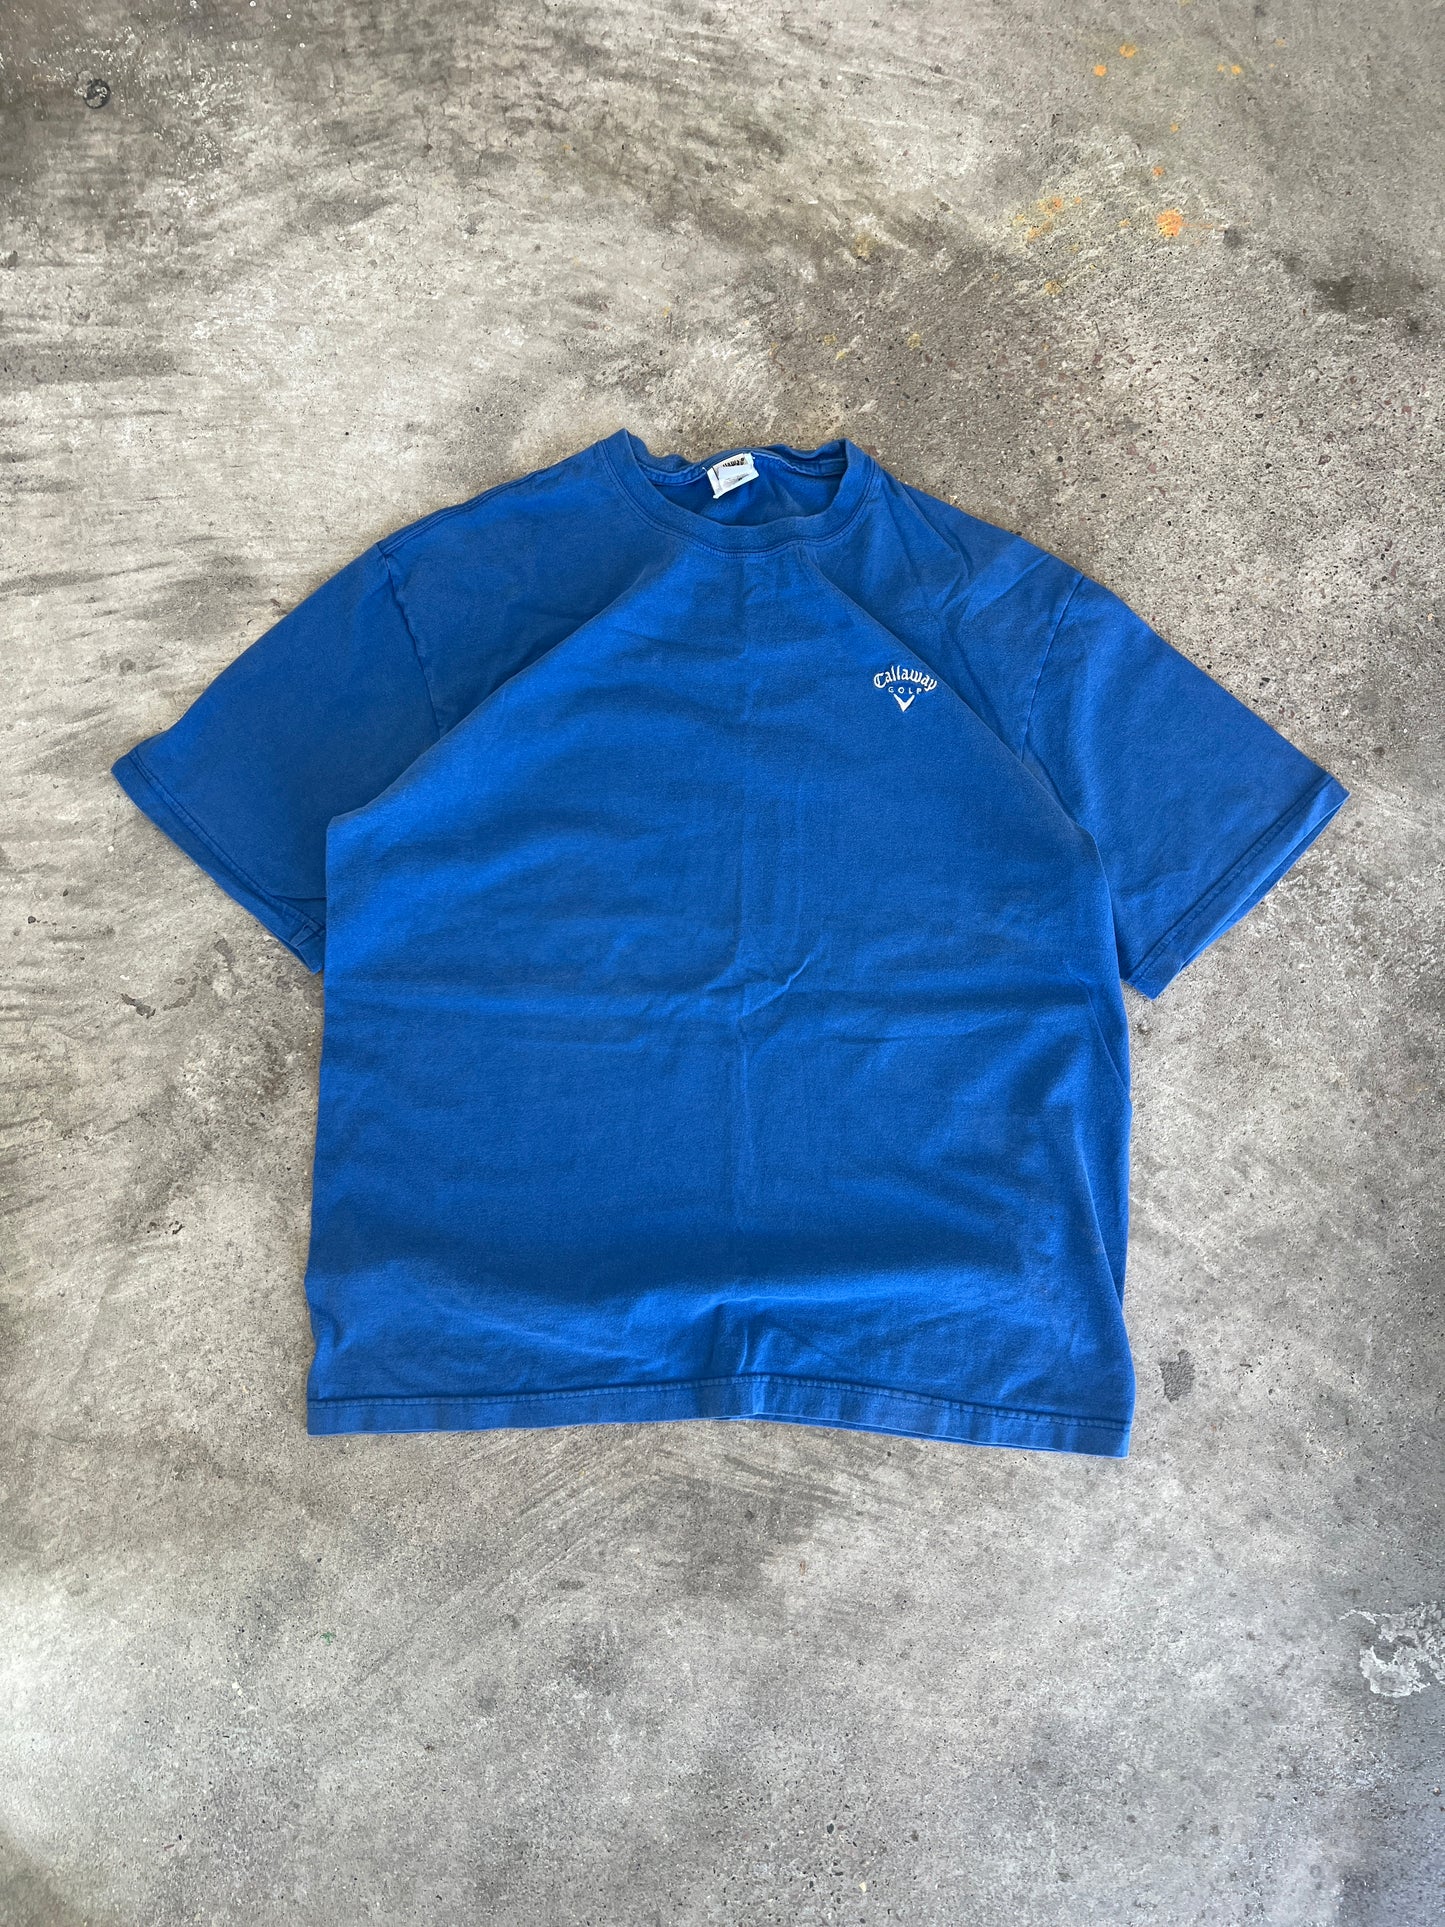 Vintage Calaway Golf Shirt - XL